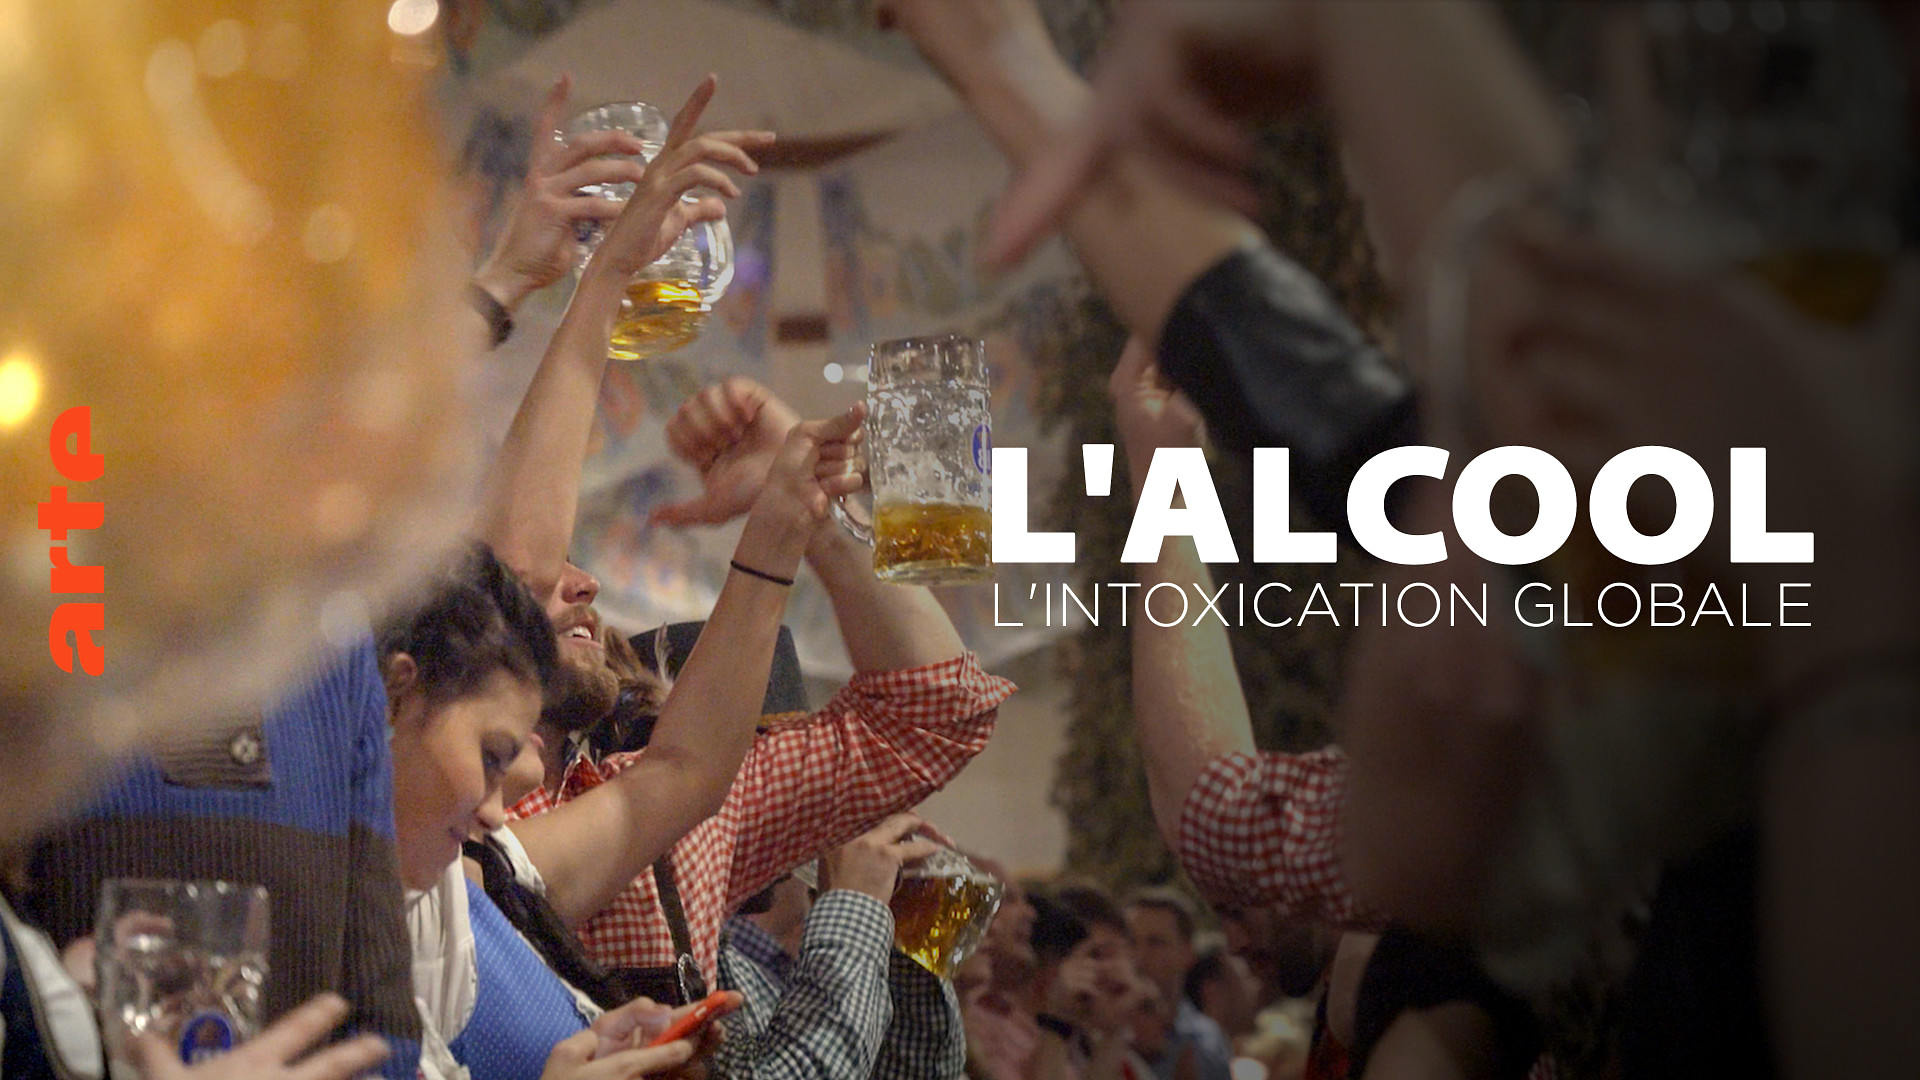 L'alcool - L'intoxication globale - Regarder le documentaire complet | ARTE